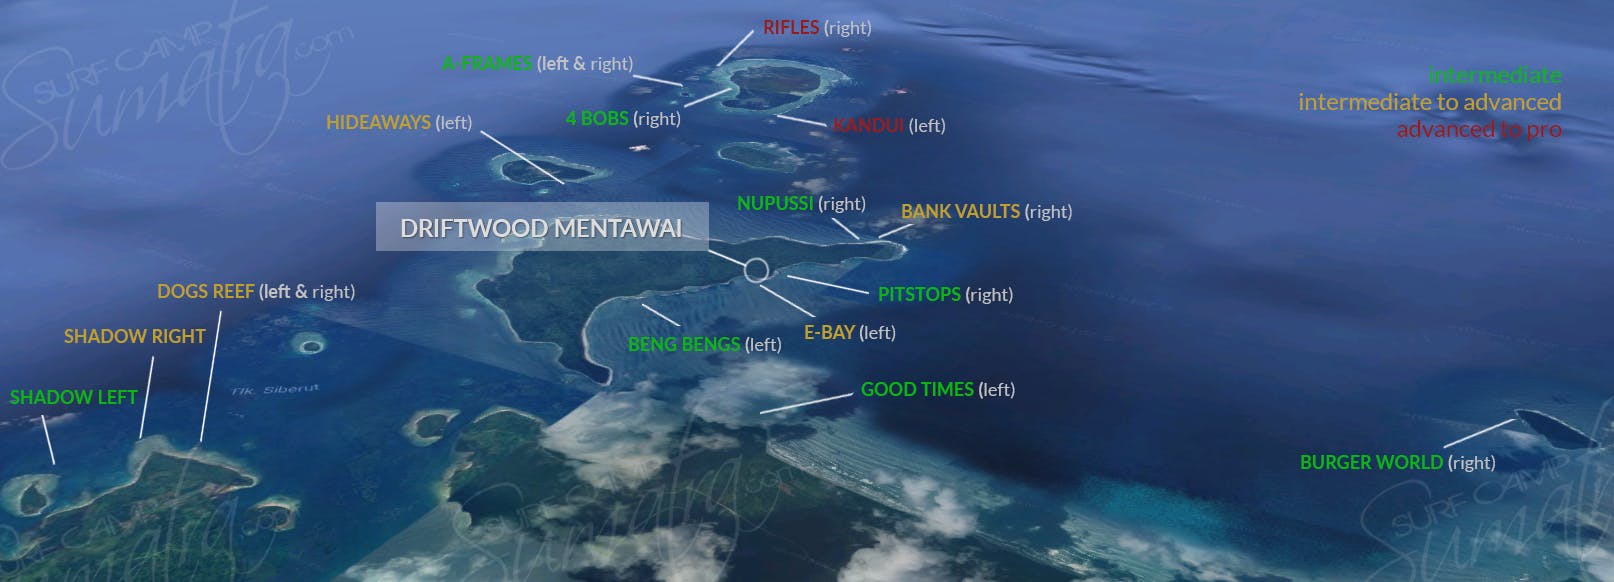 surf map mentawai islands